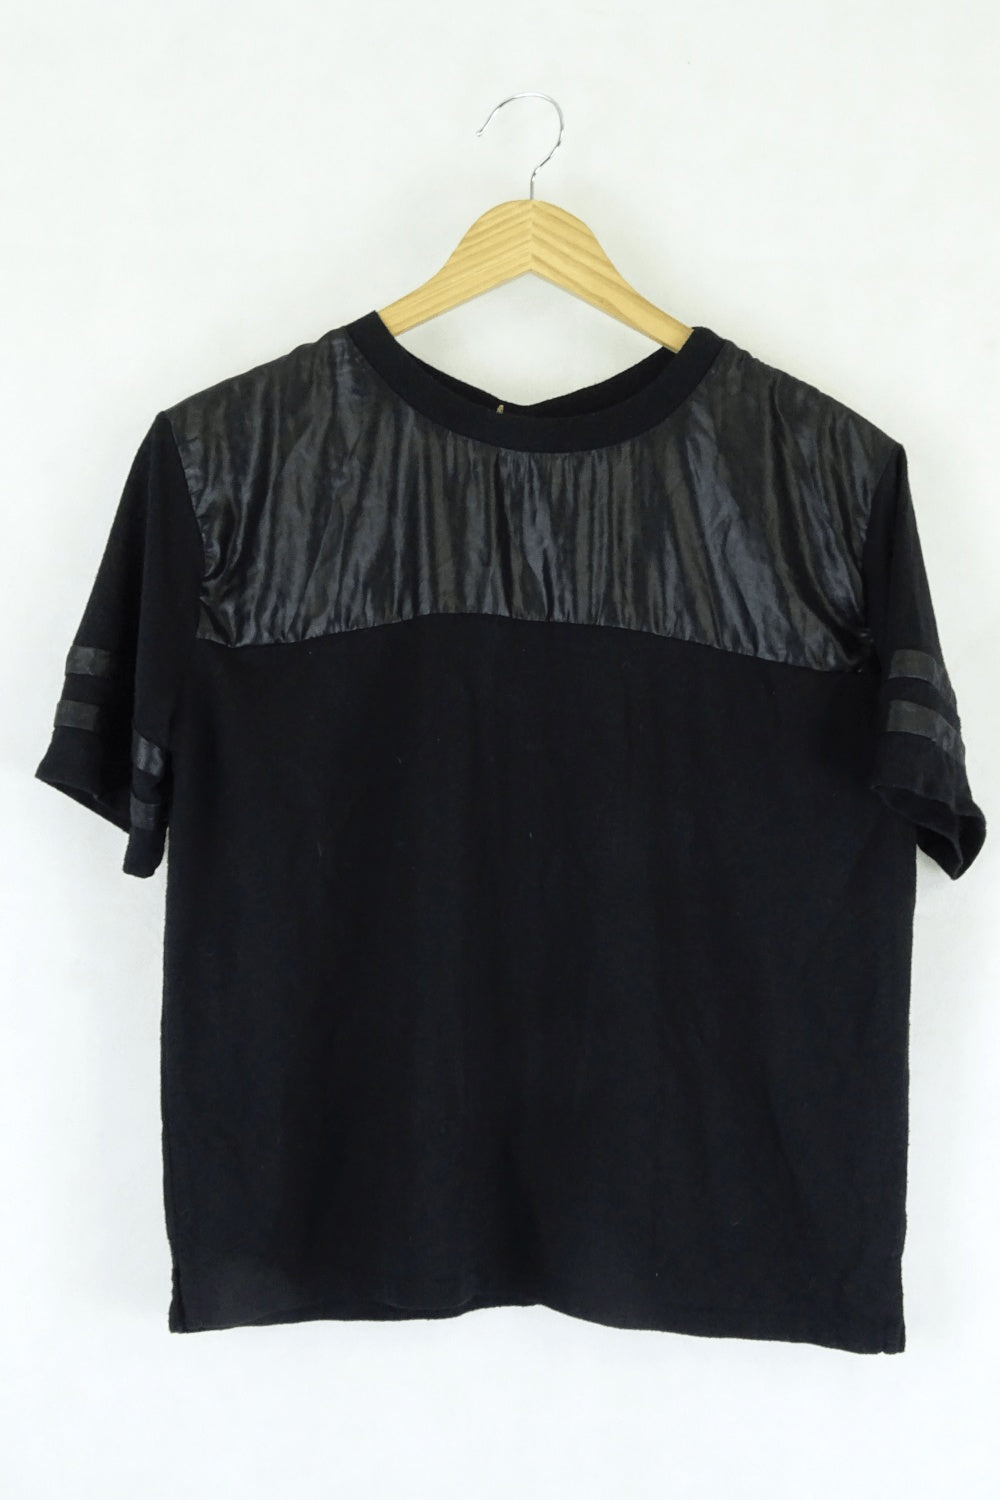 Zara Black T-Shirt M